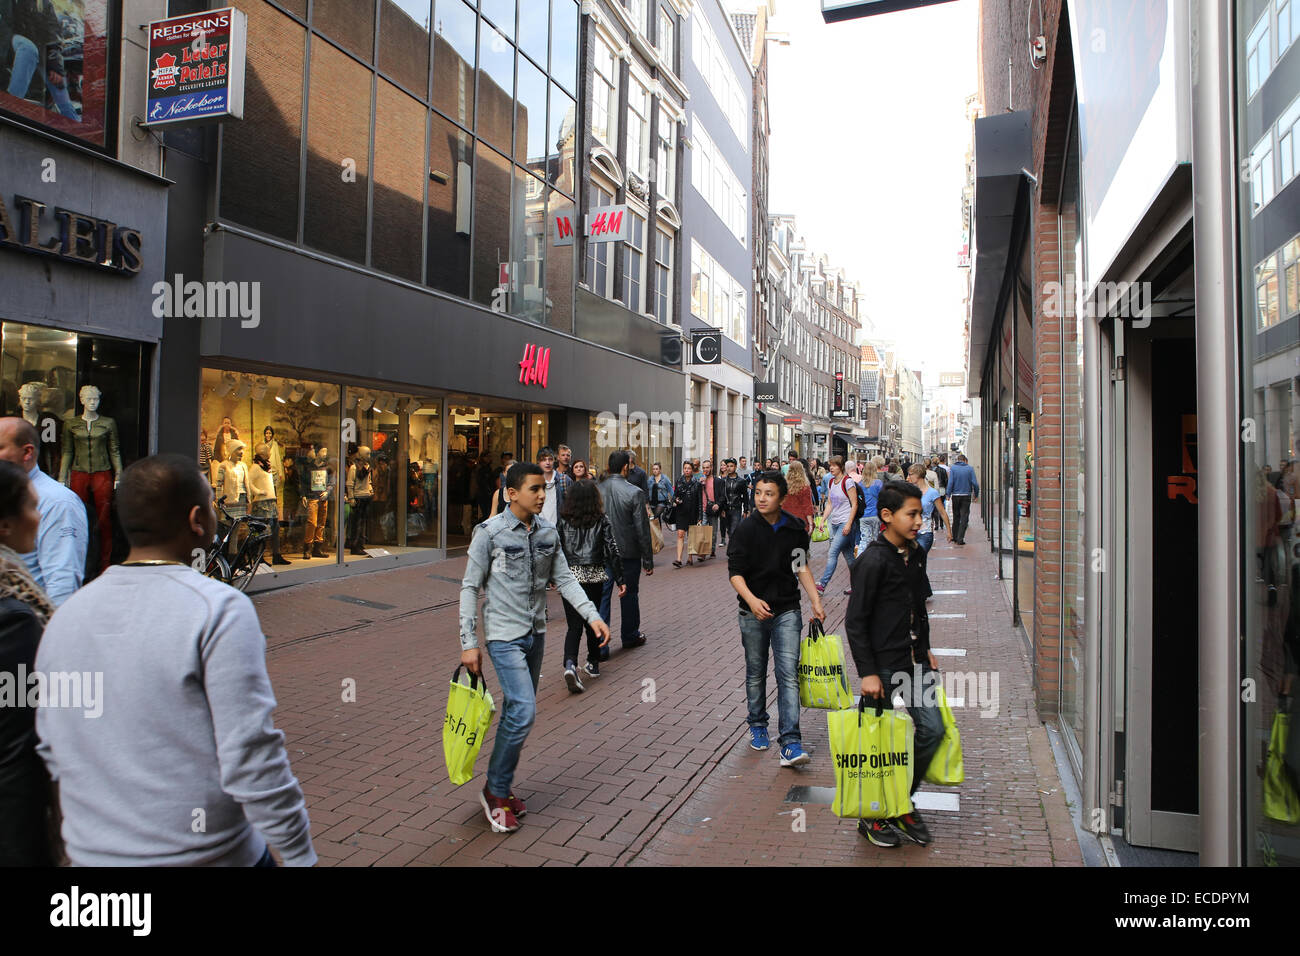 amsterdam shopping street Kalverstraat Stock Photo - Alamy